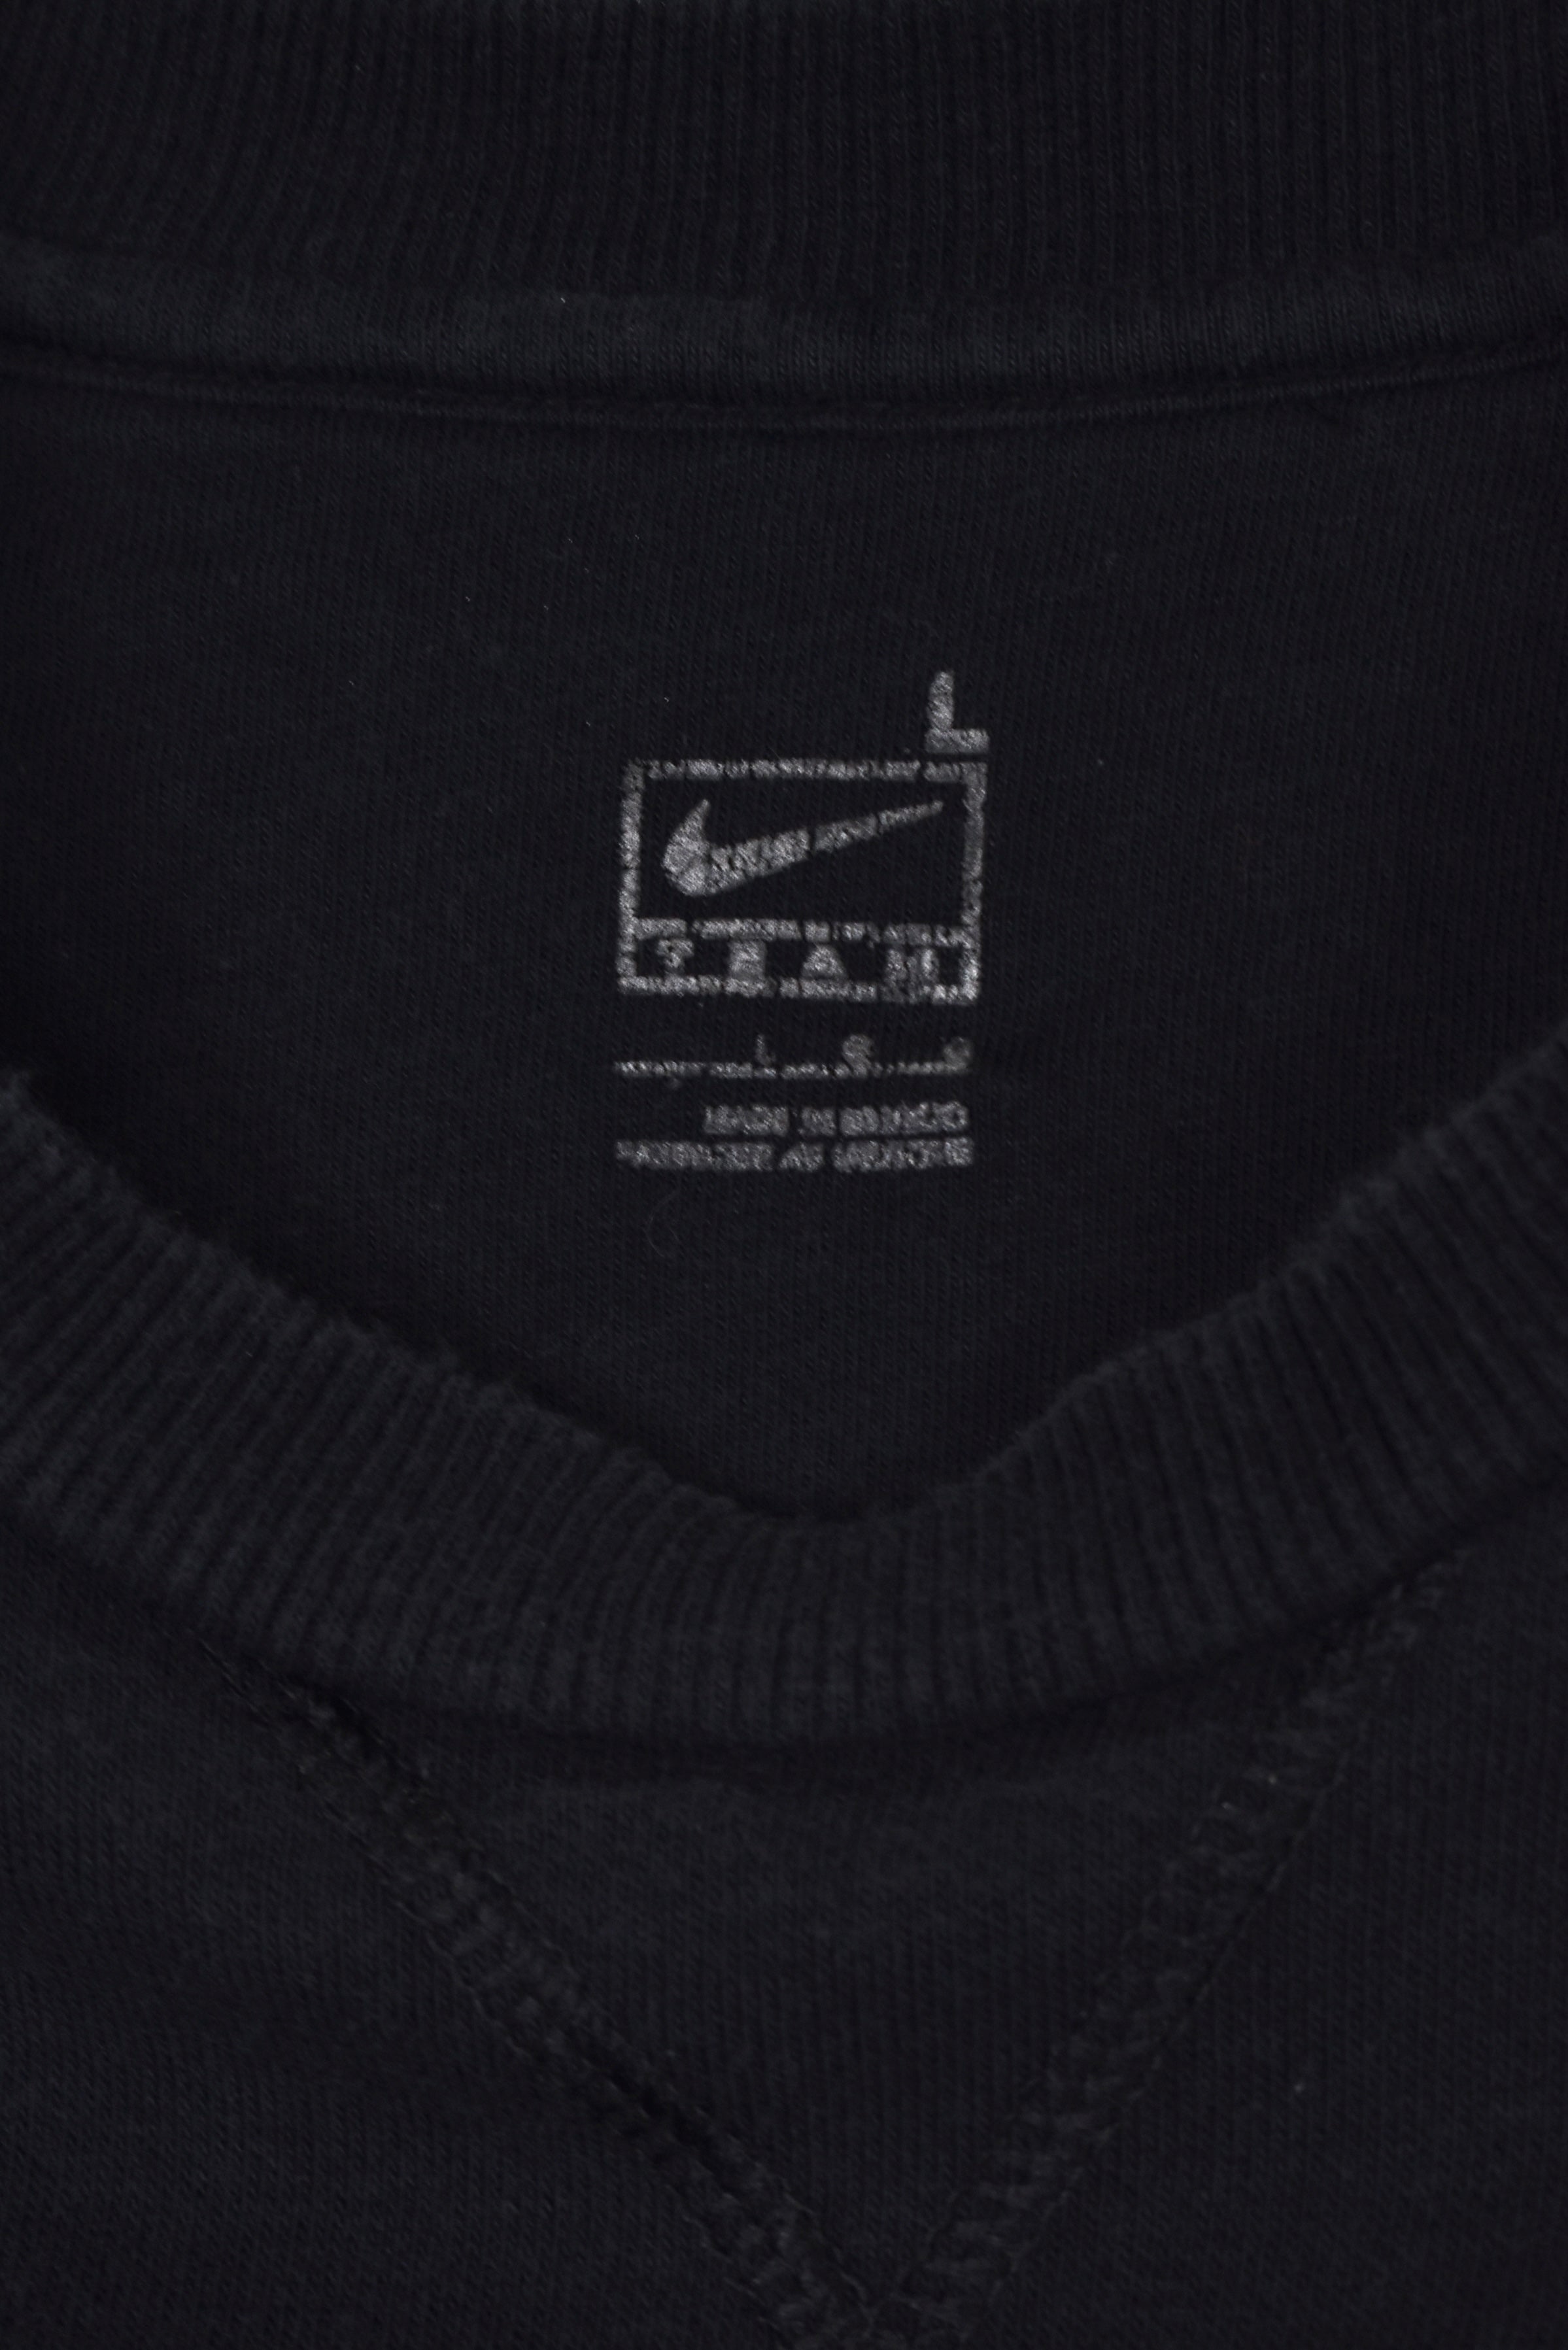 Vintage US Military Academy sweatshirt (XL), black Nike embroidered crewneck